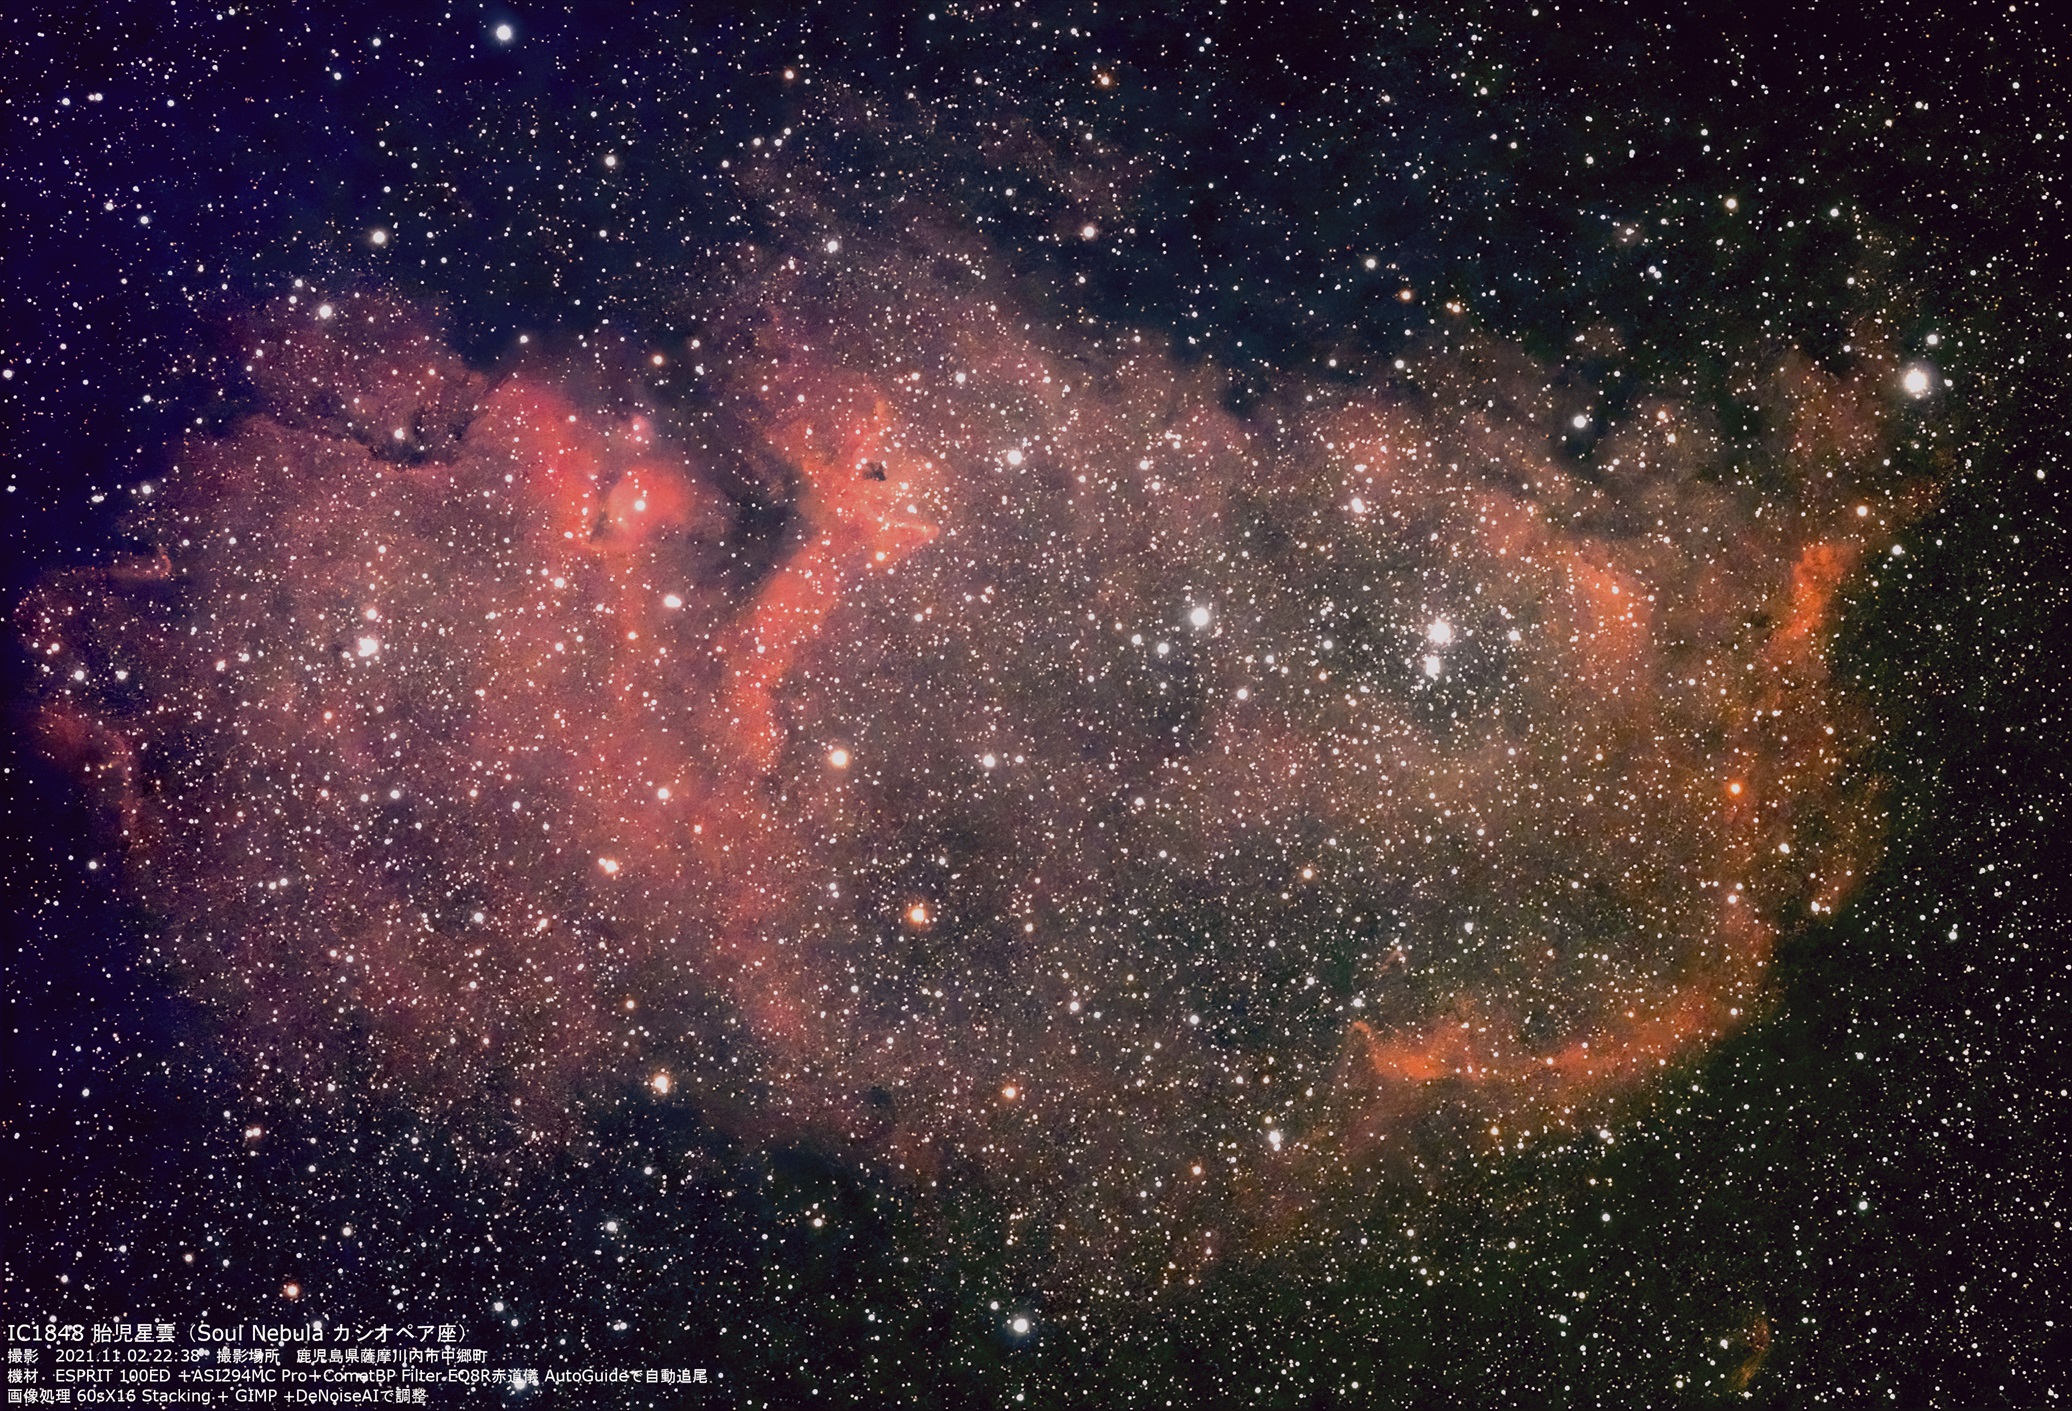 『IC1848 胎児星雲（Soul Nebula）』(2021年11月2日)